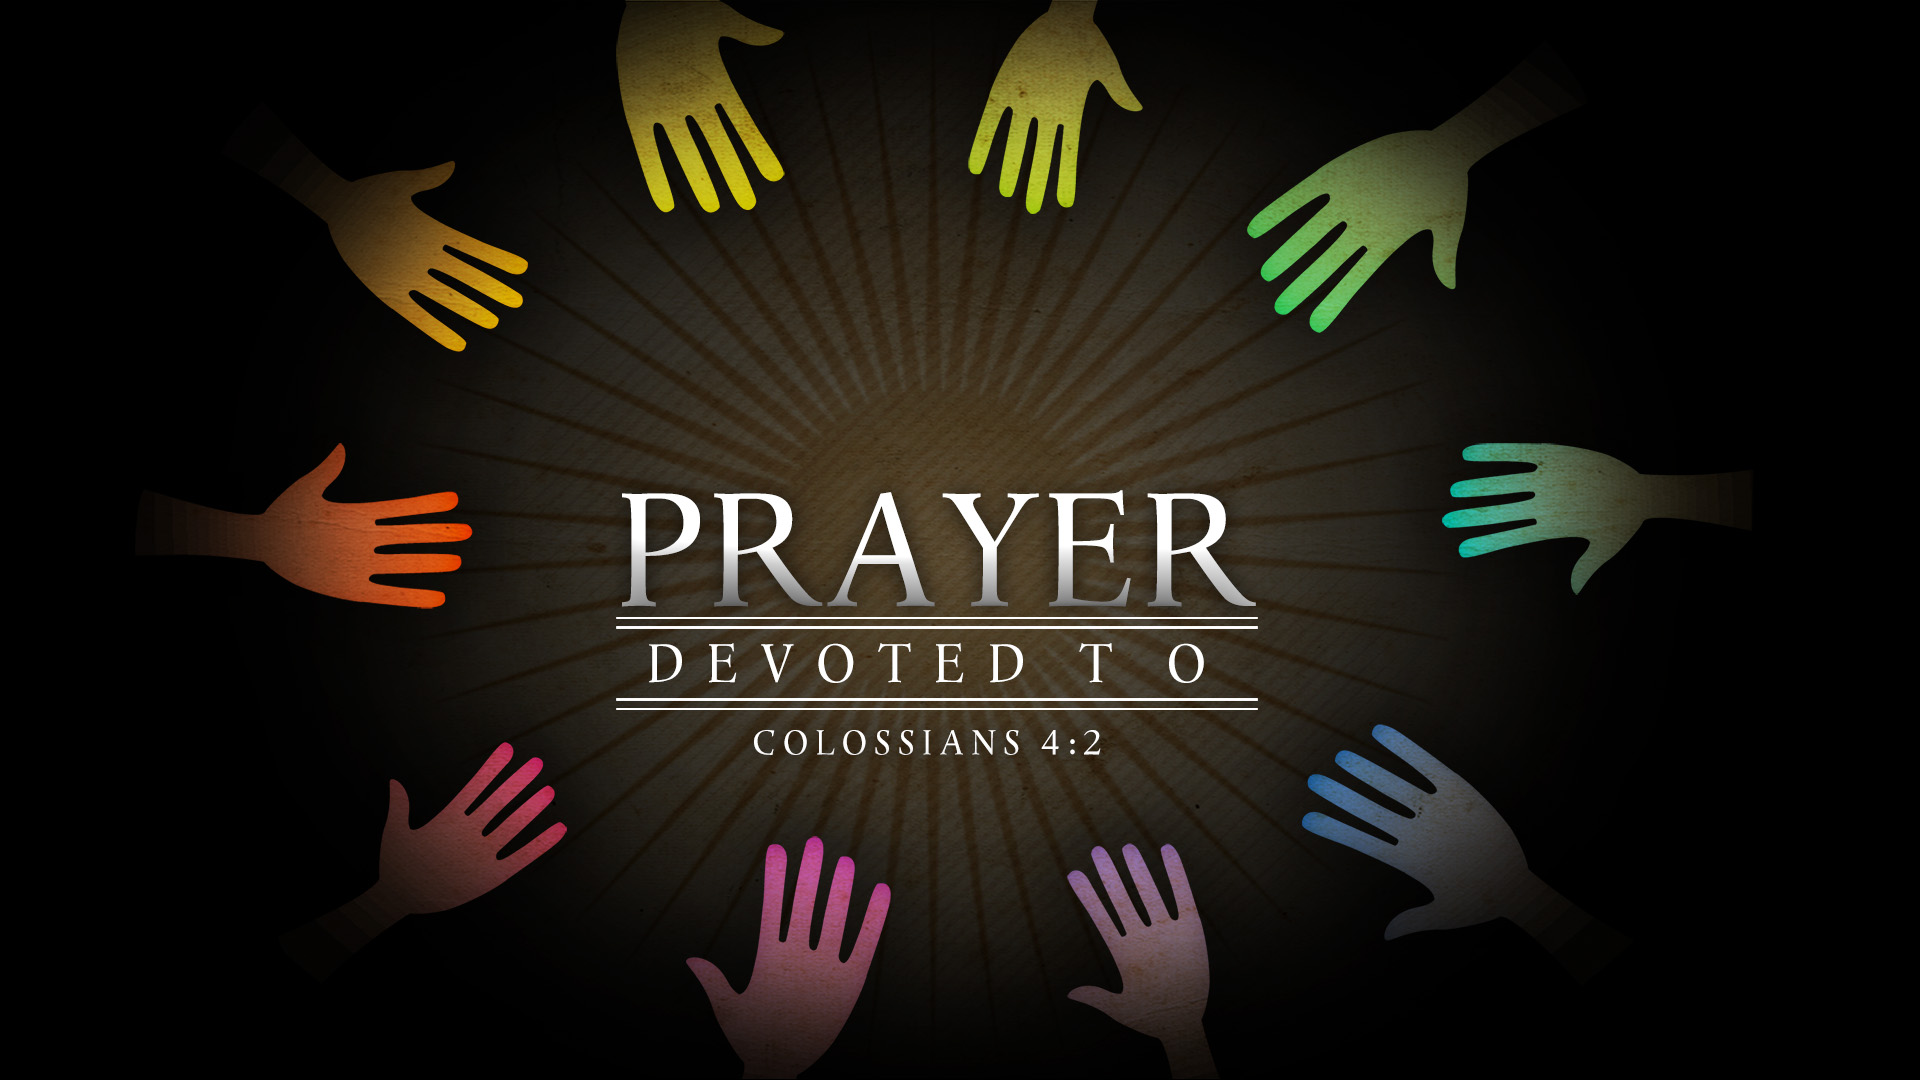 Devoted to Prayer